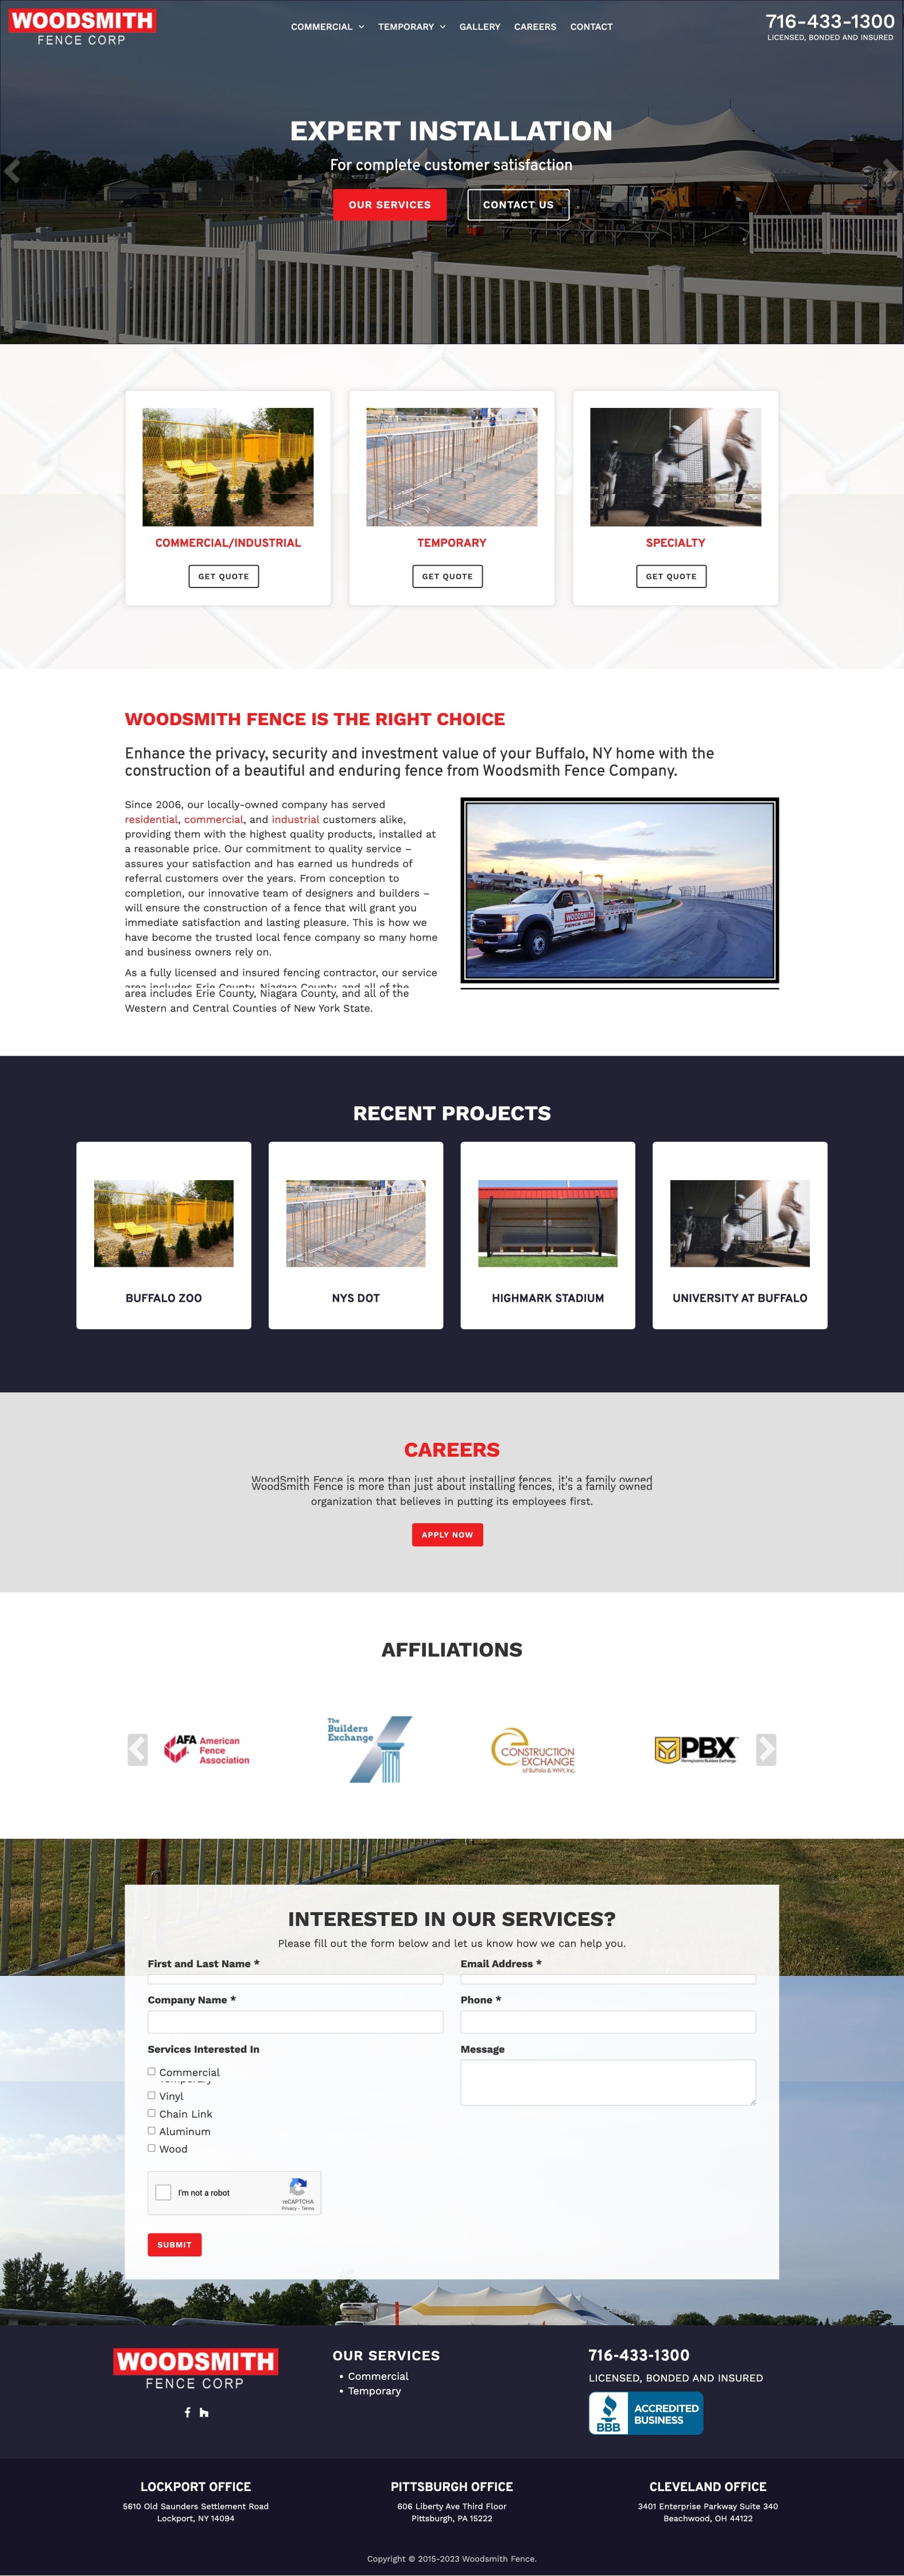 Woodsmith Fence Website - Desktop